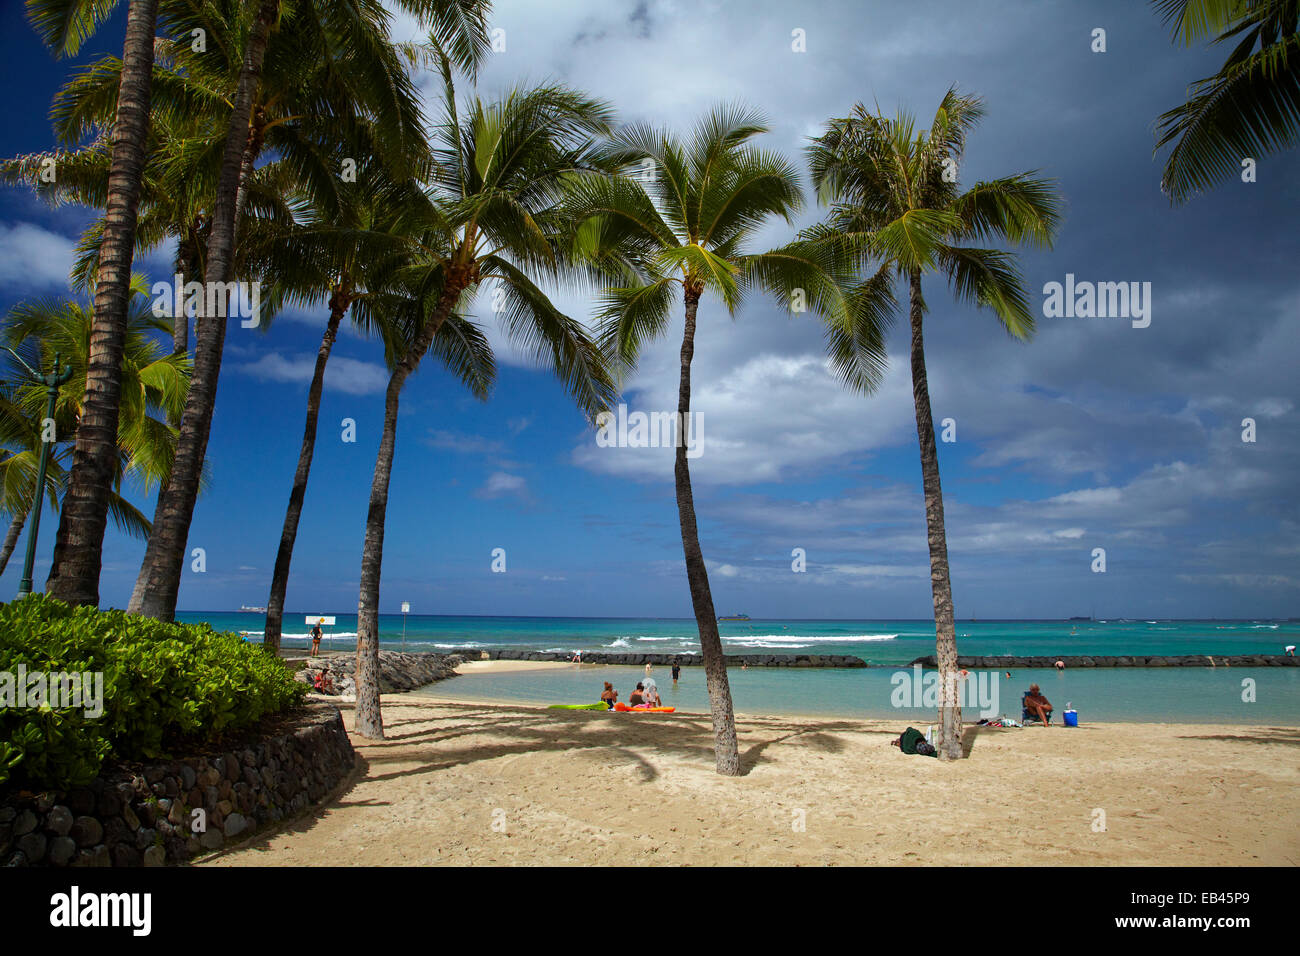 La spiaggia di Waikiki e palme, Waikiki, Honolulu Oahu, Hawaii, STATI UNITI D'AMERICA Foto Stock